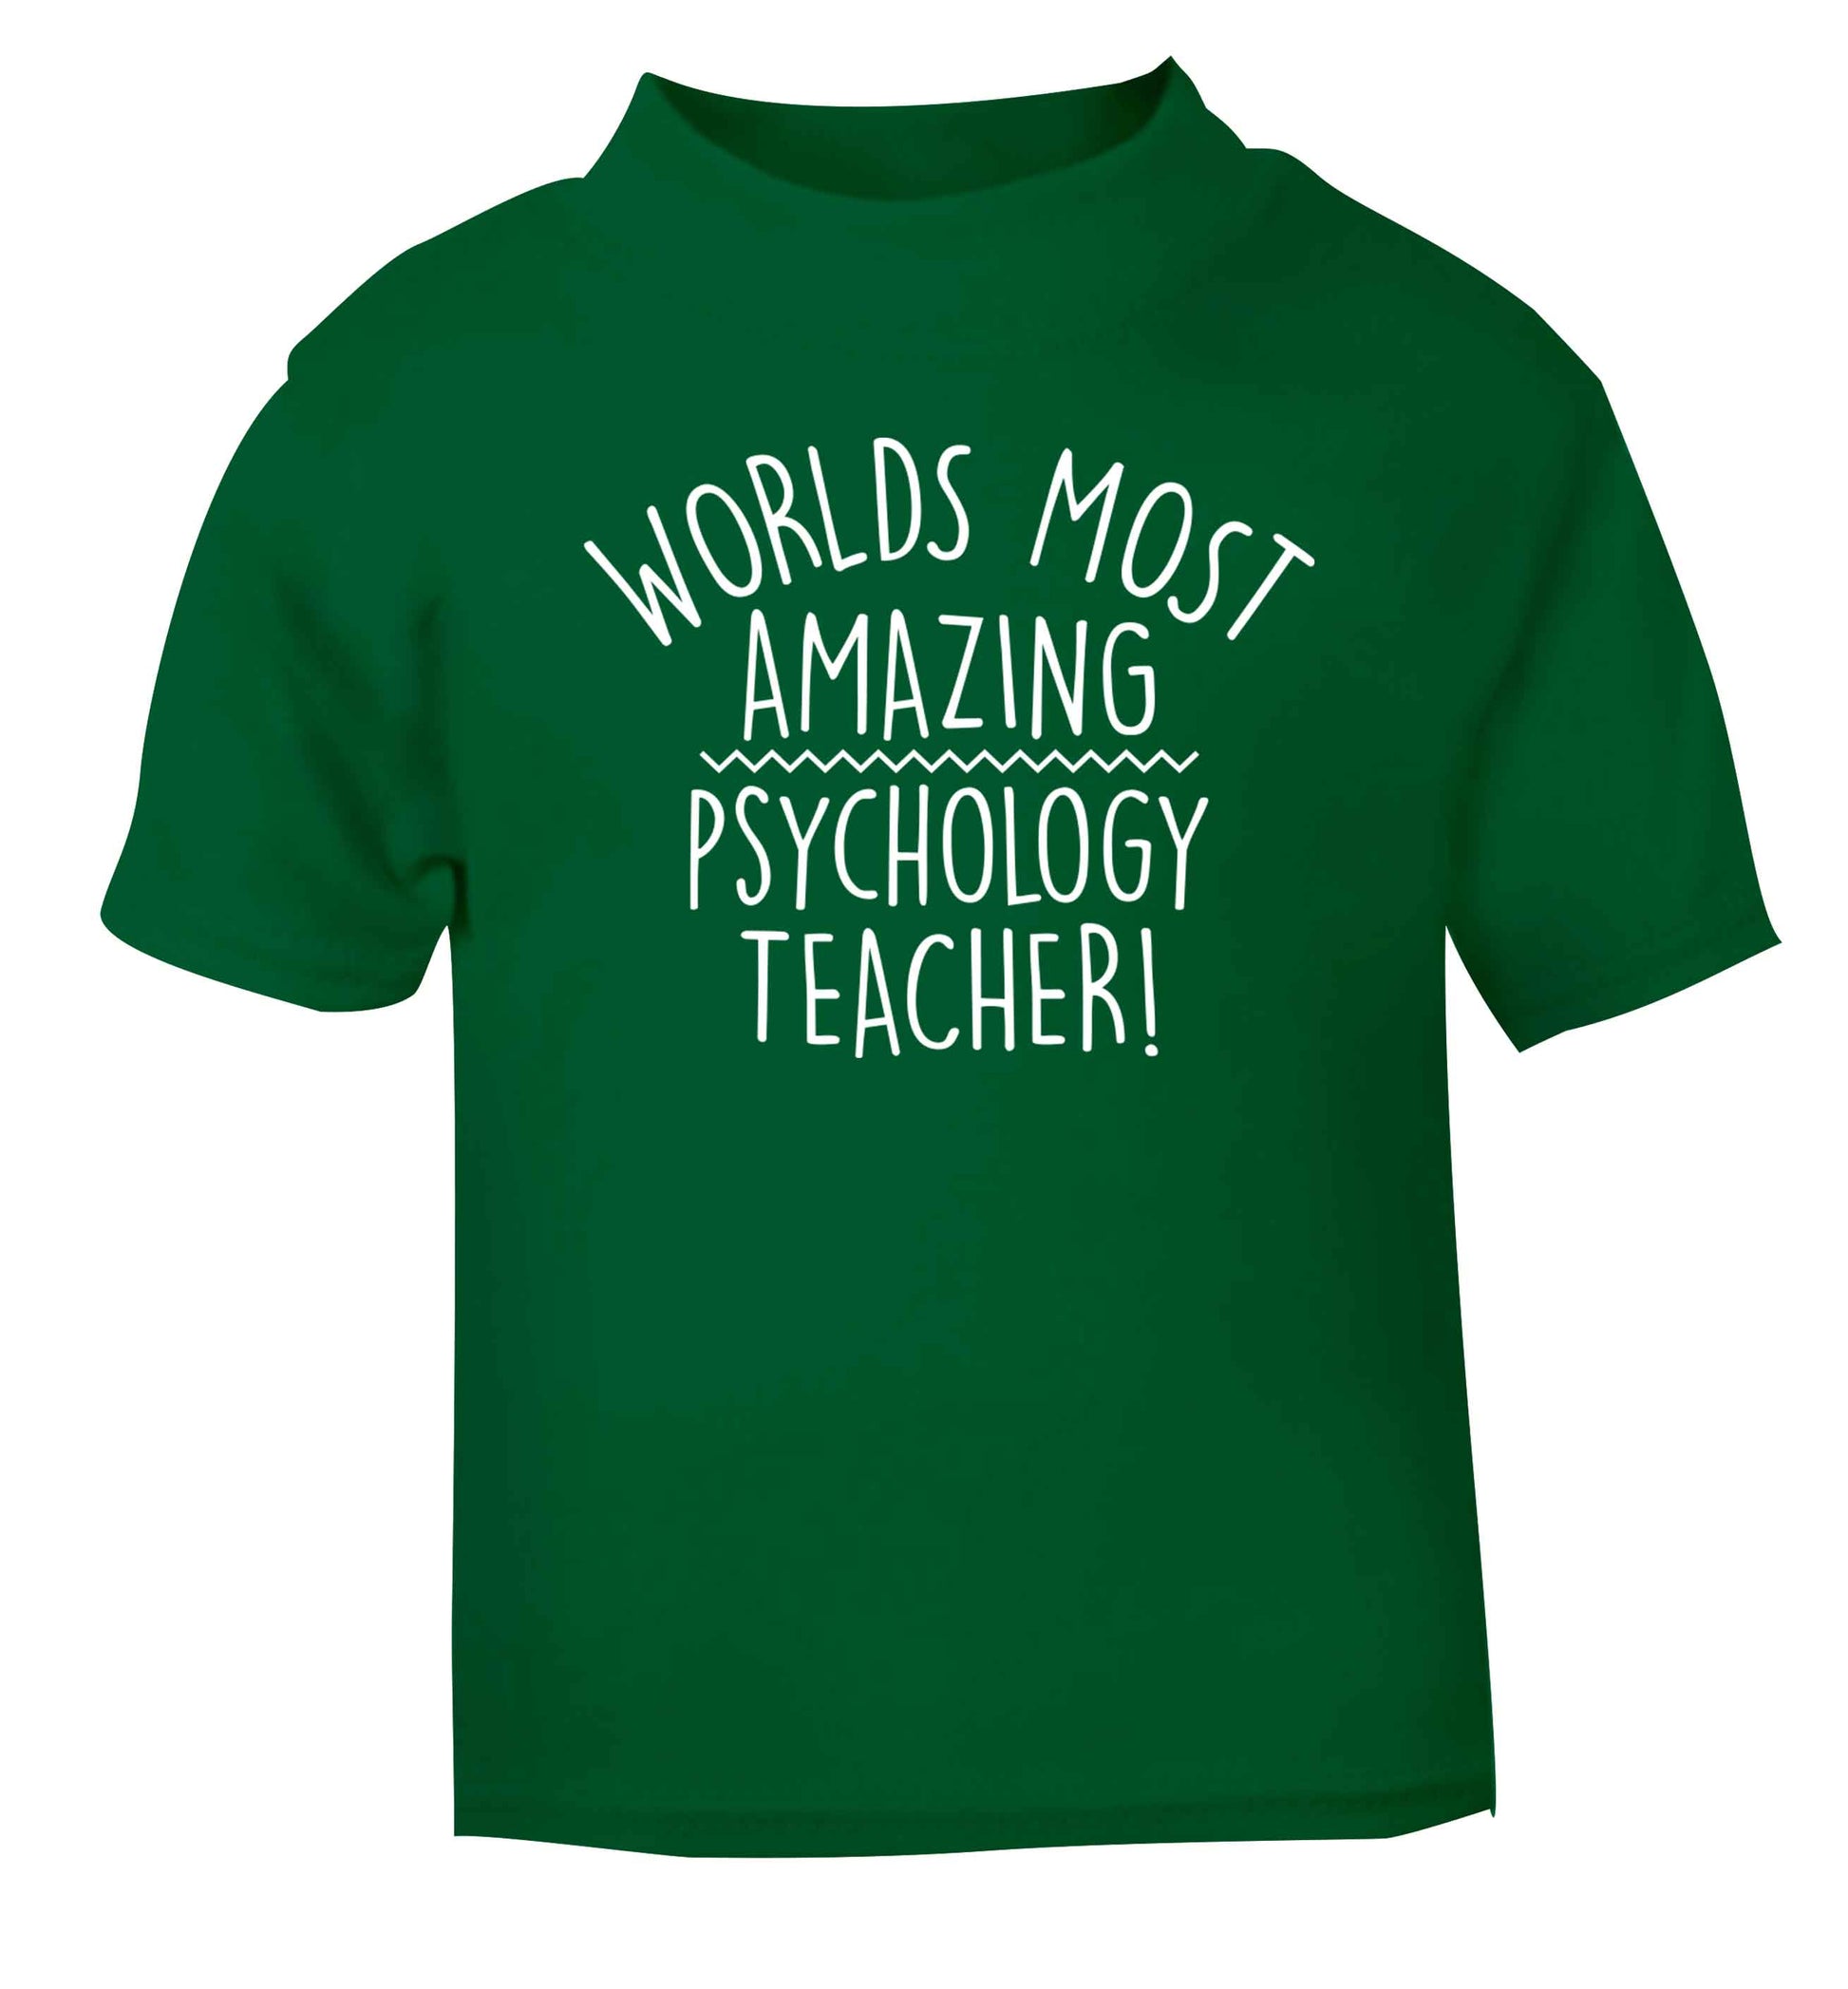 Worlds most amazing psychology teacher green baby toddler Tshirt 2 Years